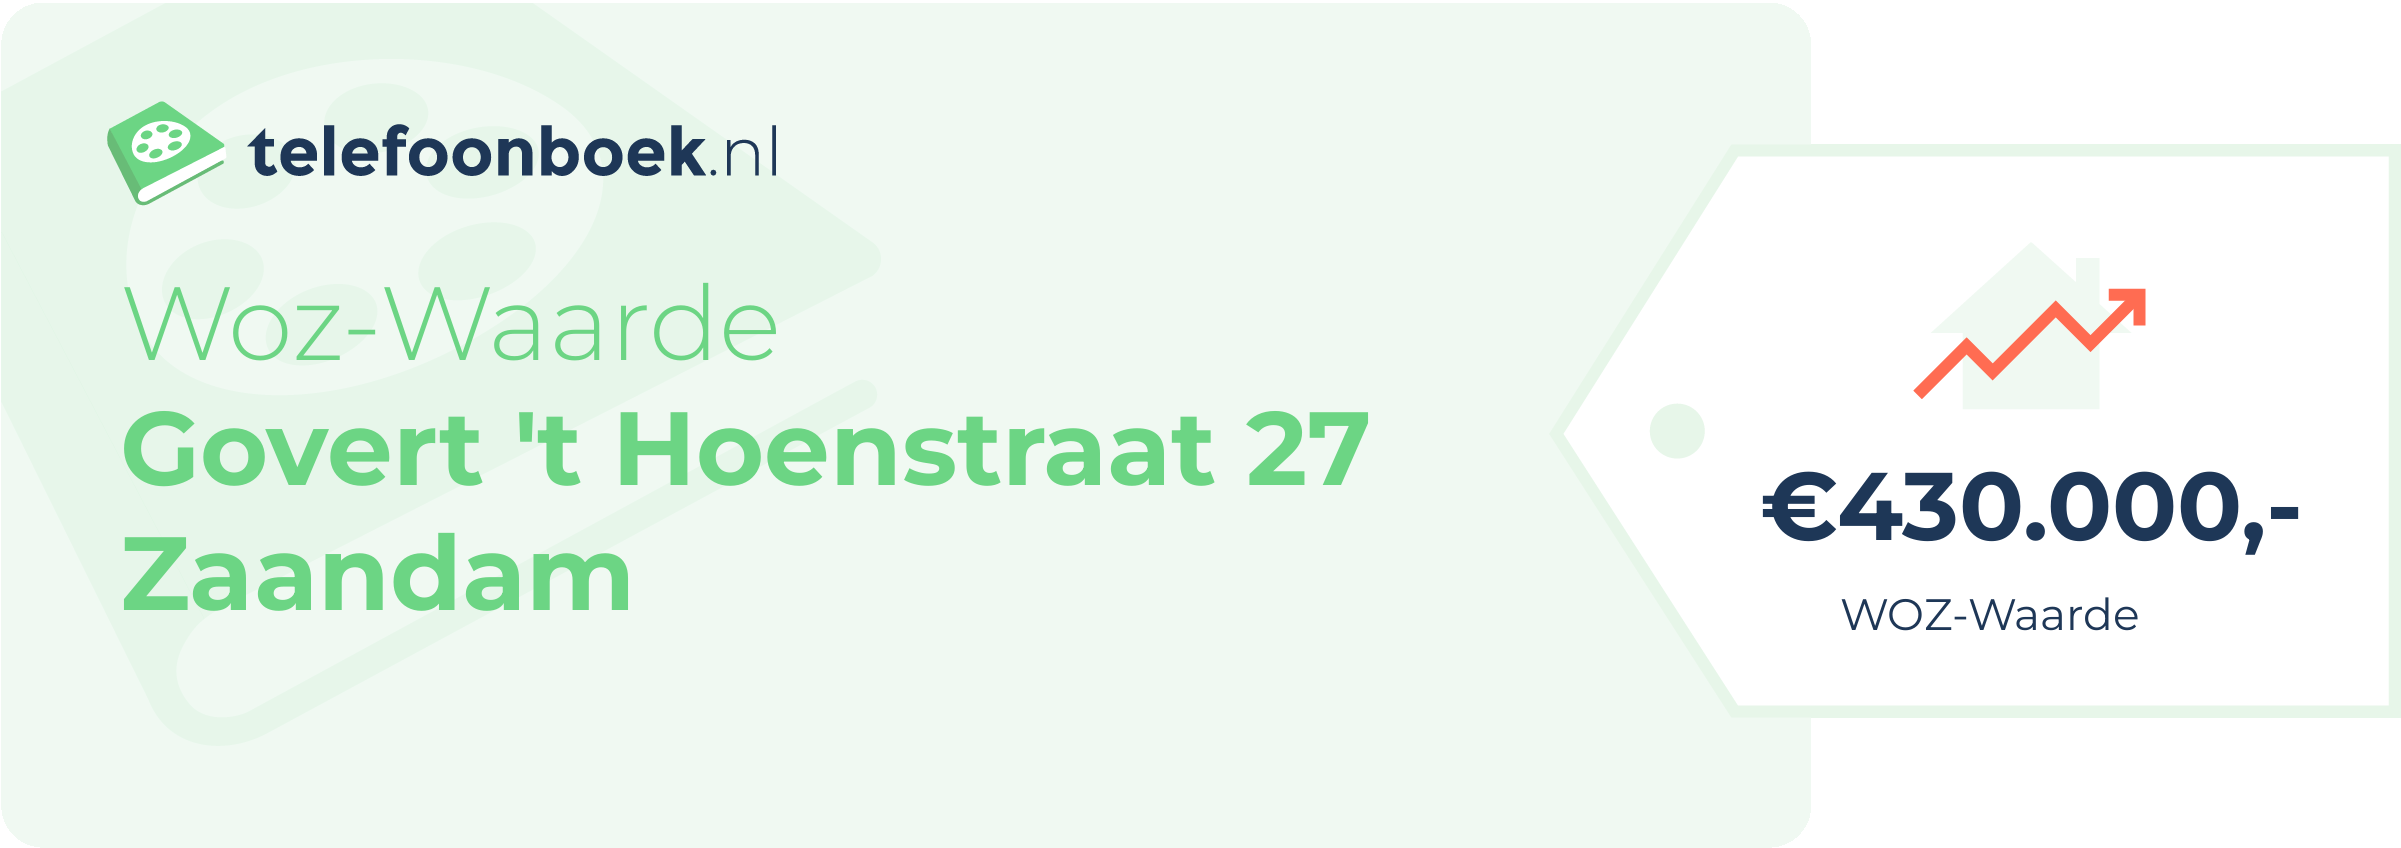 WOZ-waarde Govert 't Hoenstraat 27 Zaandam